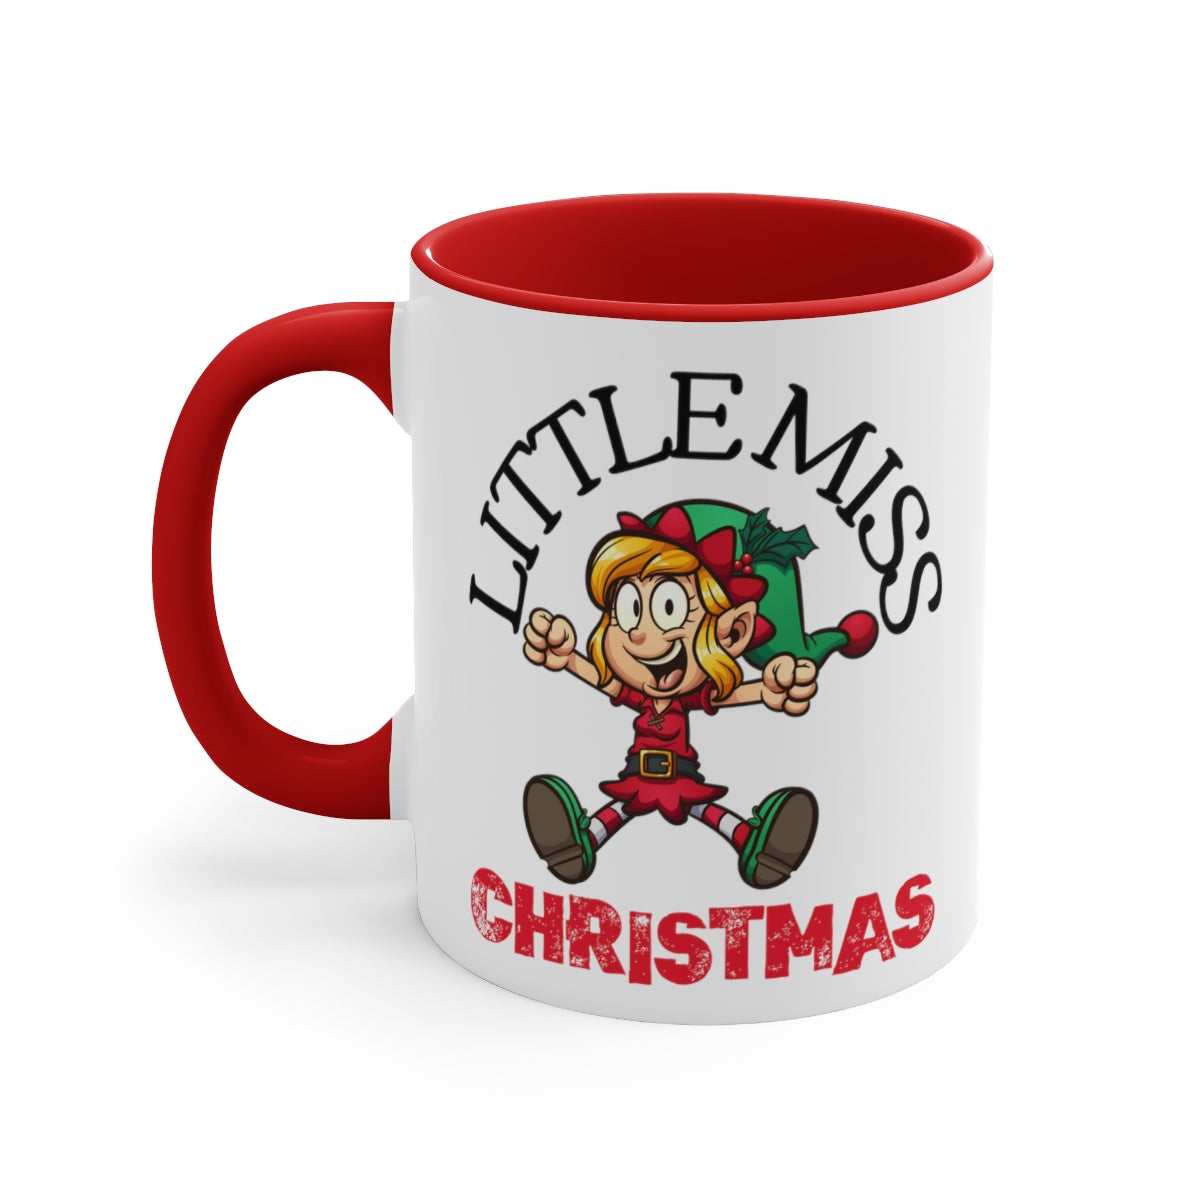 Little Miss Christmas Mug